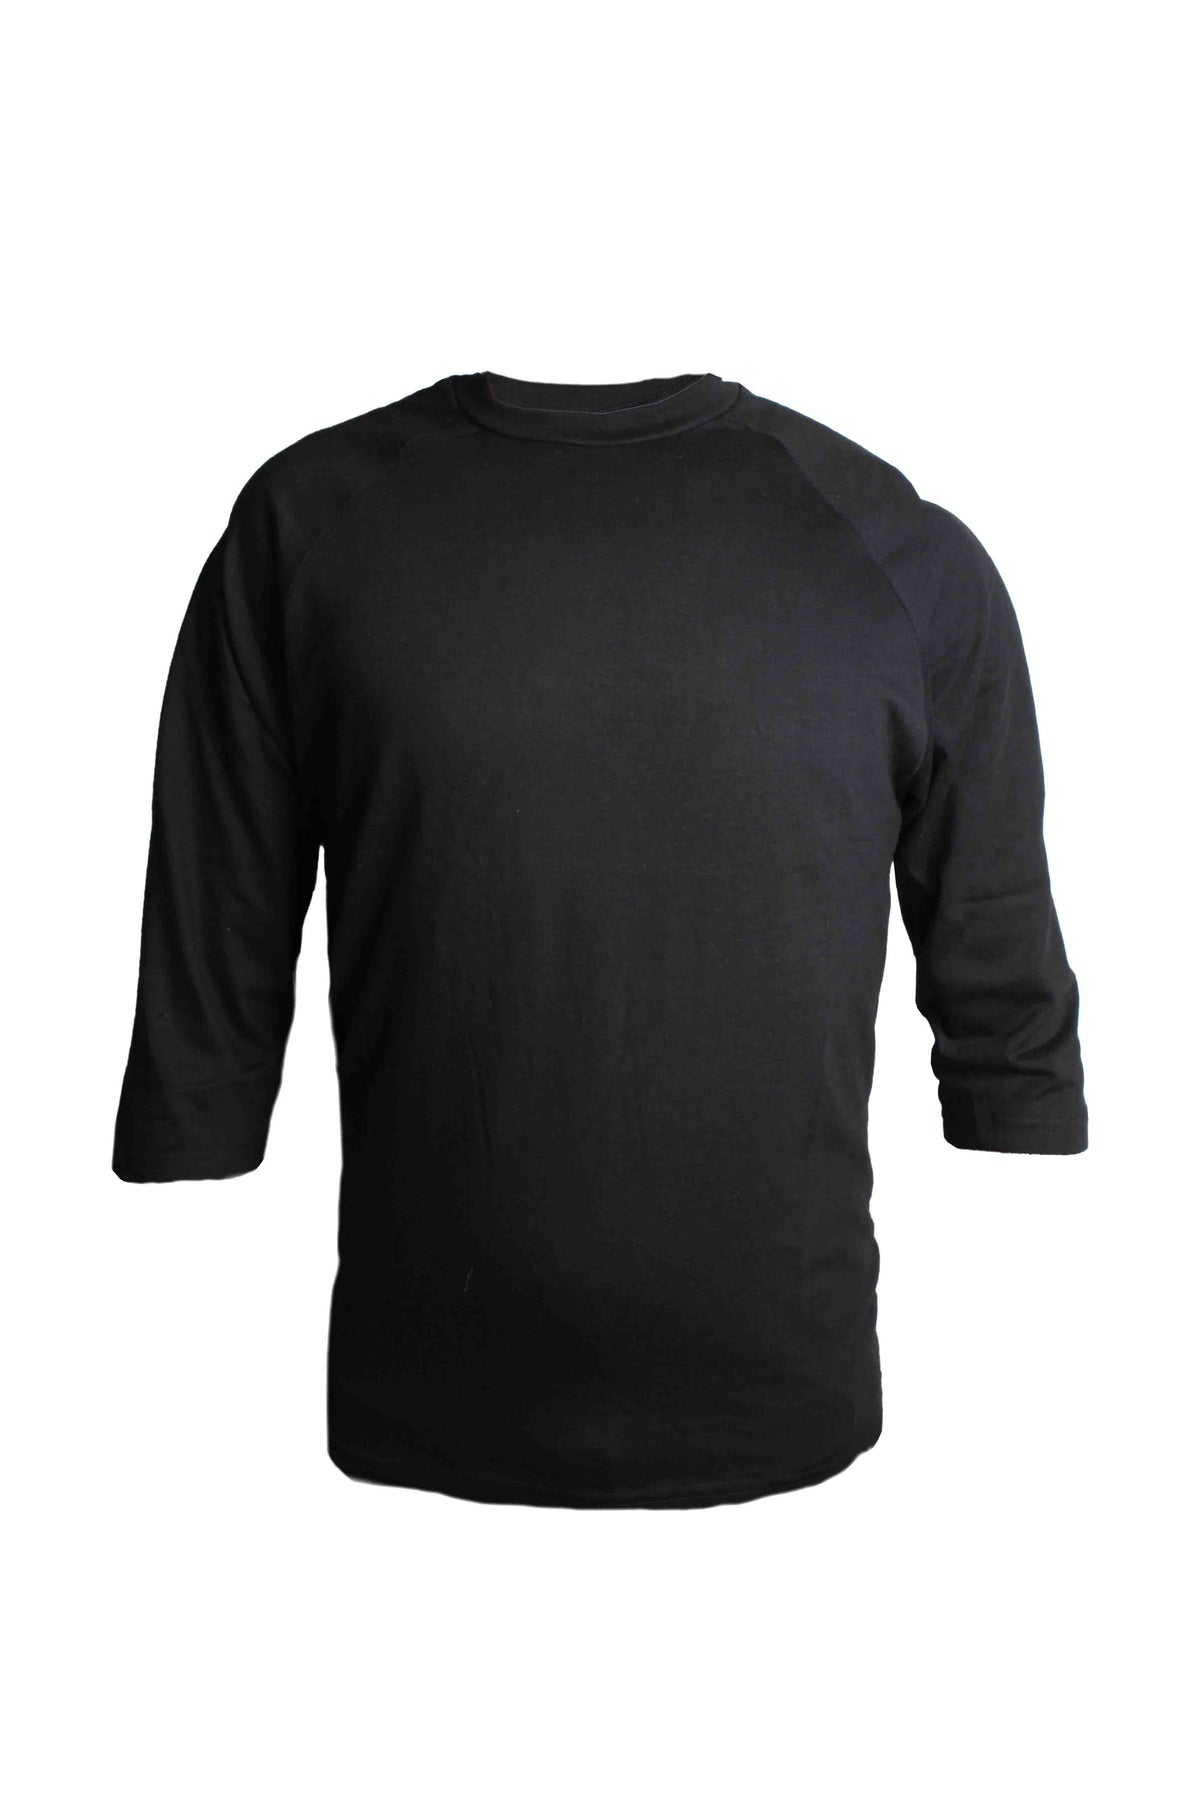 TheLovely Men & Women Unisex Short Sleeve Baseball Raglan Tee Shirt Top